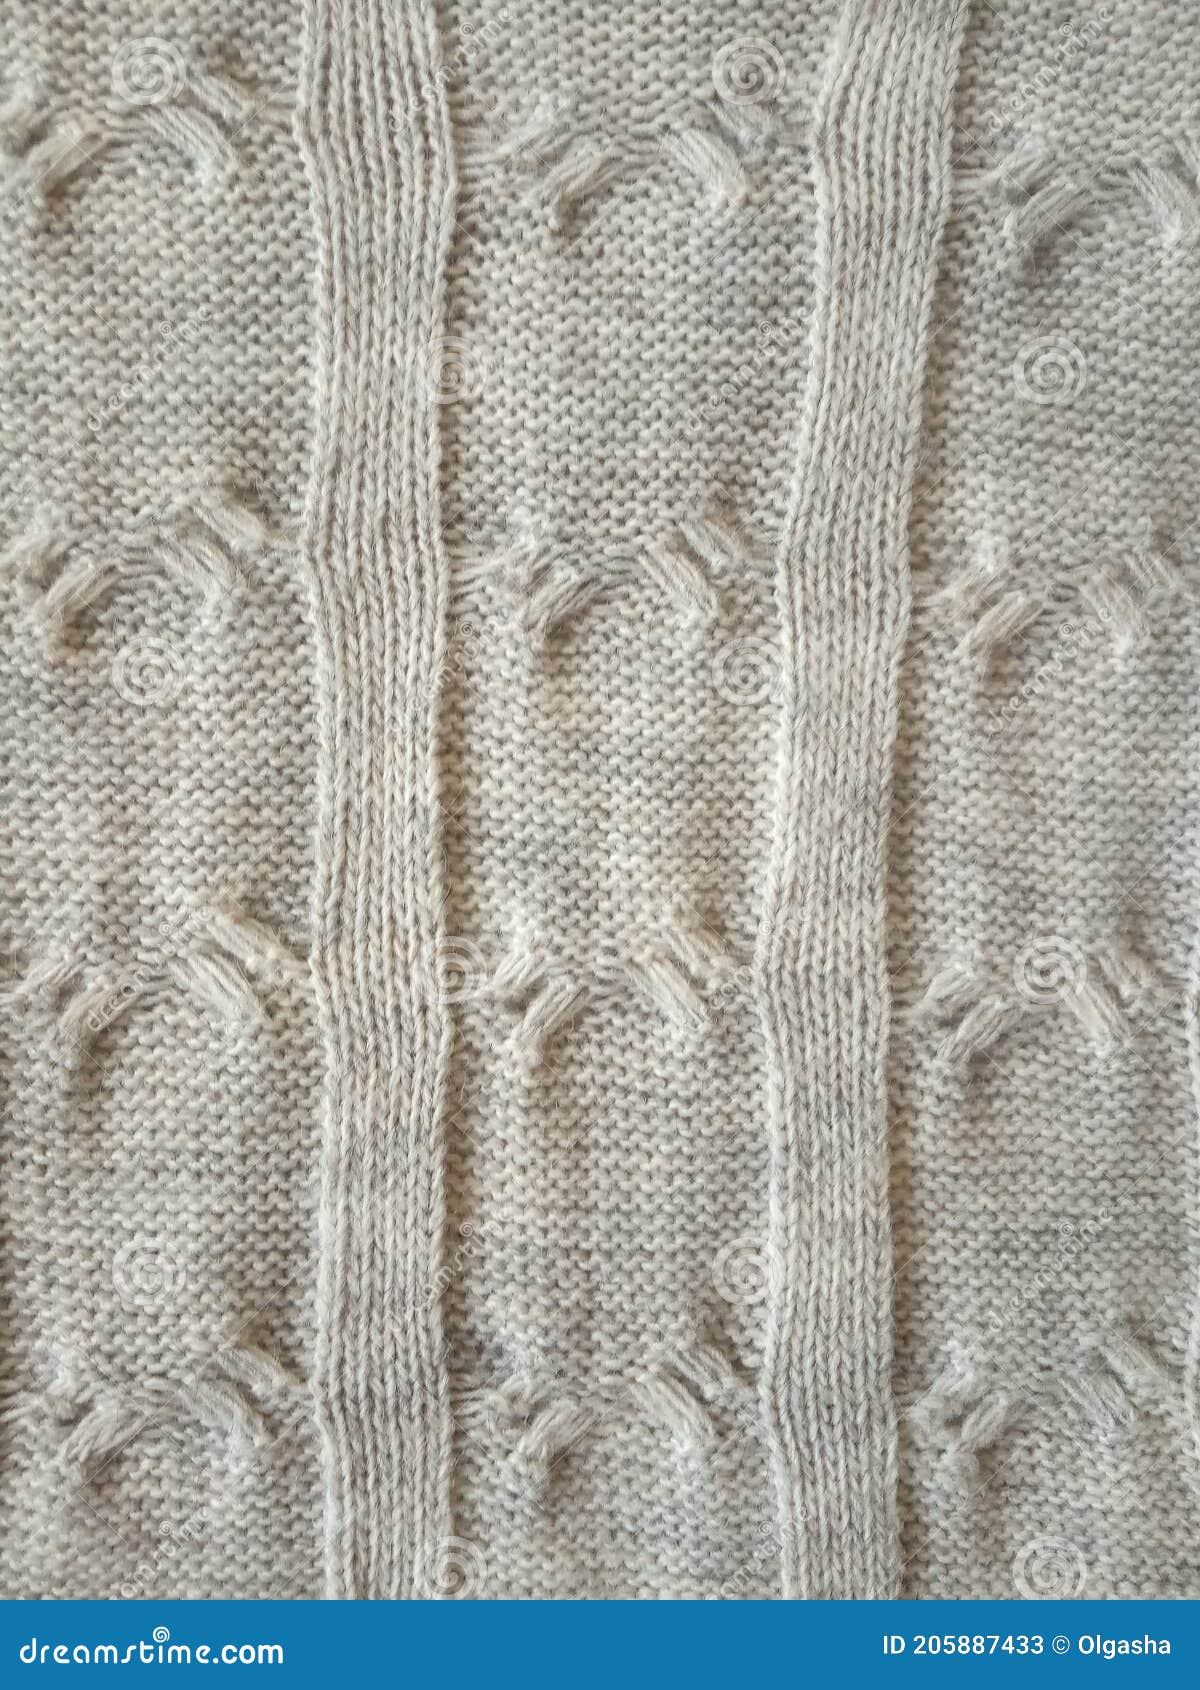 Gray Knit Pattern Background Stock Image - Image of knit, gray: 205887433